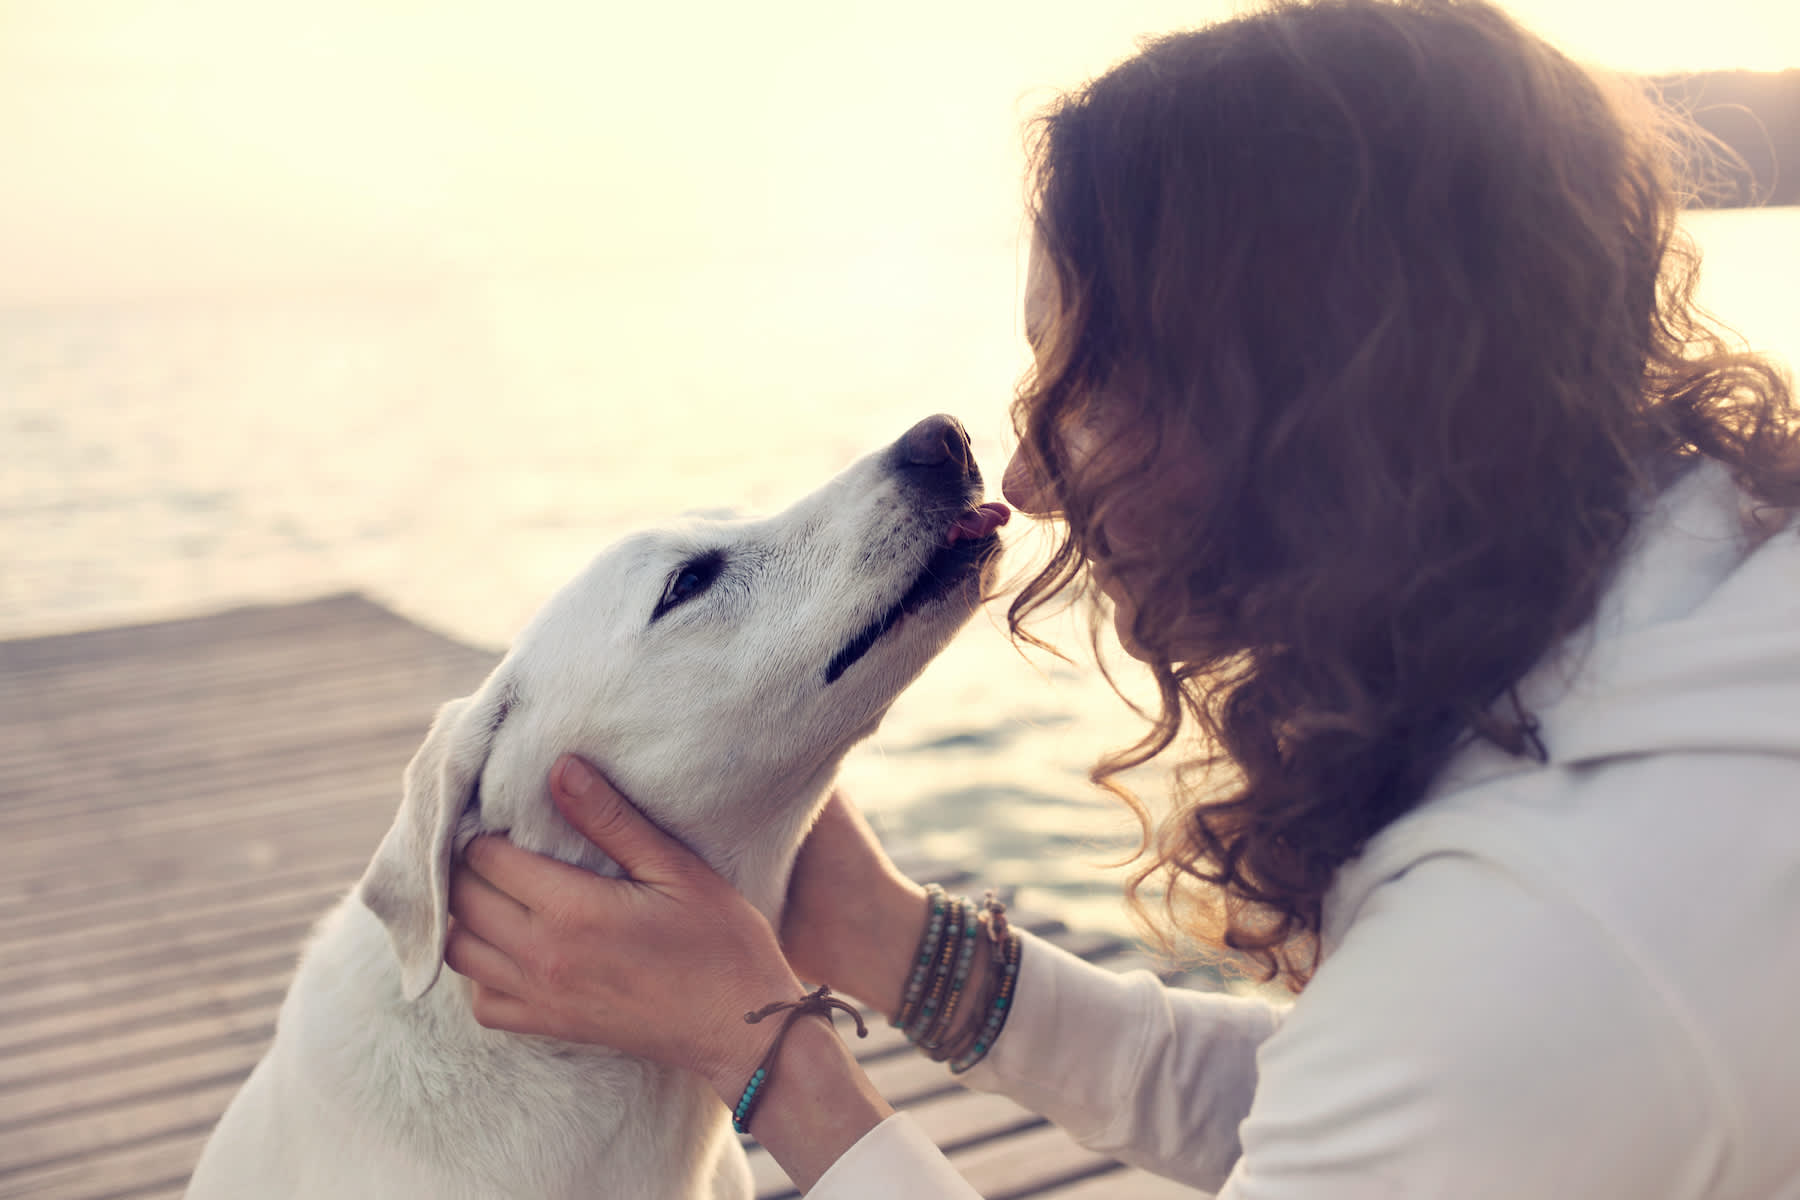 Canva - His owner dog licks gently, loving gesture